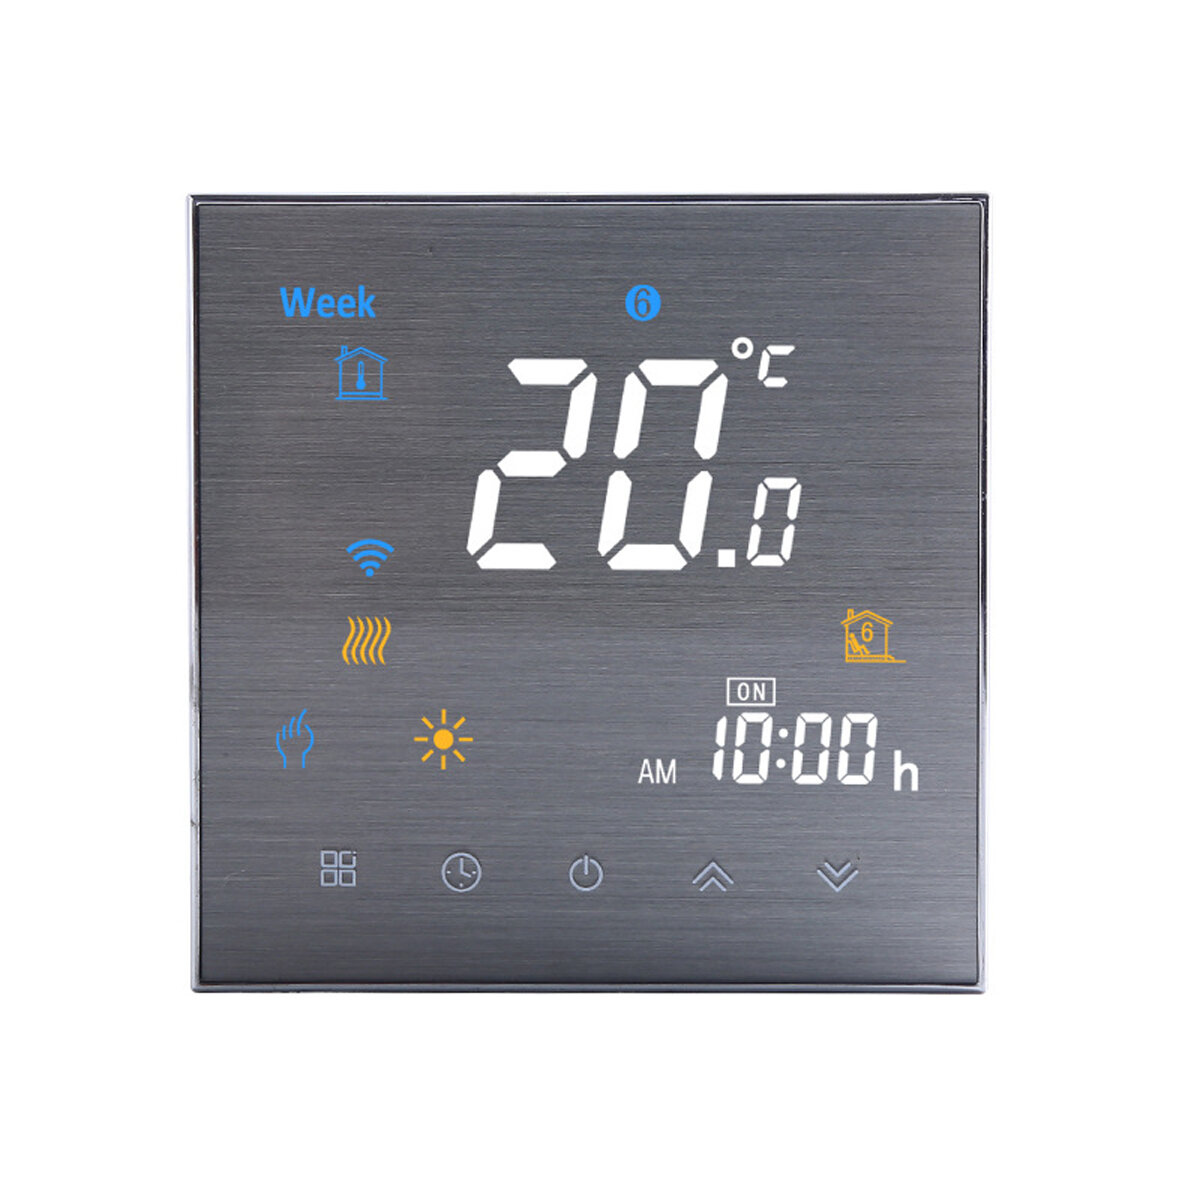 Image of Smart WiFi Temperature Controller Floor Heating Plumbing Fireplace Temperature Control Support Aleax Google Assistant